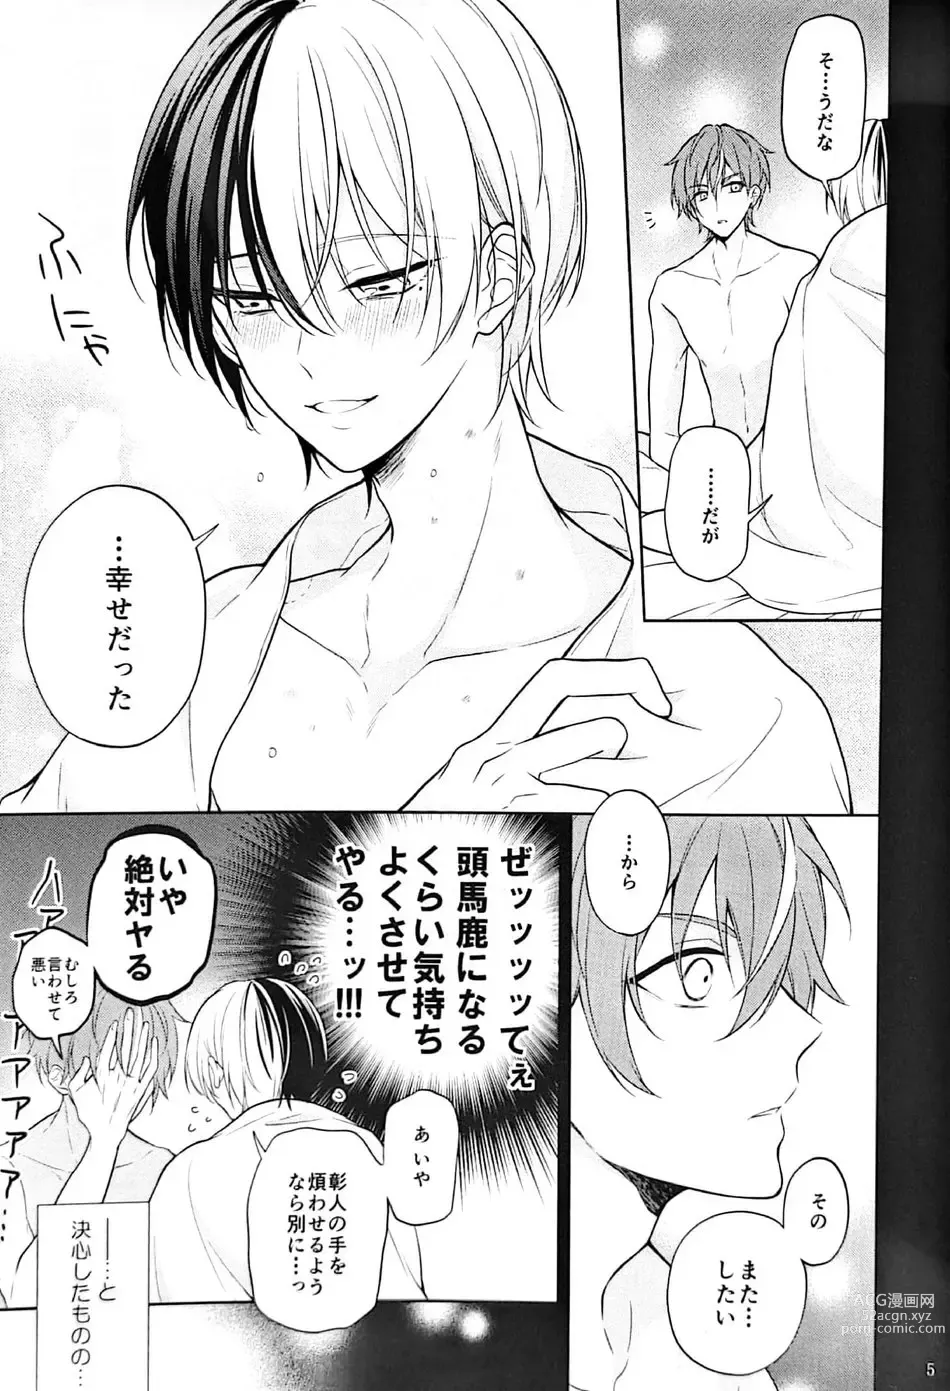 Page 6 of doujinshi RETRY